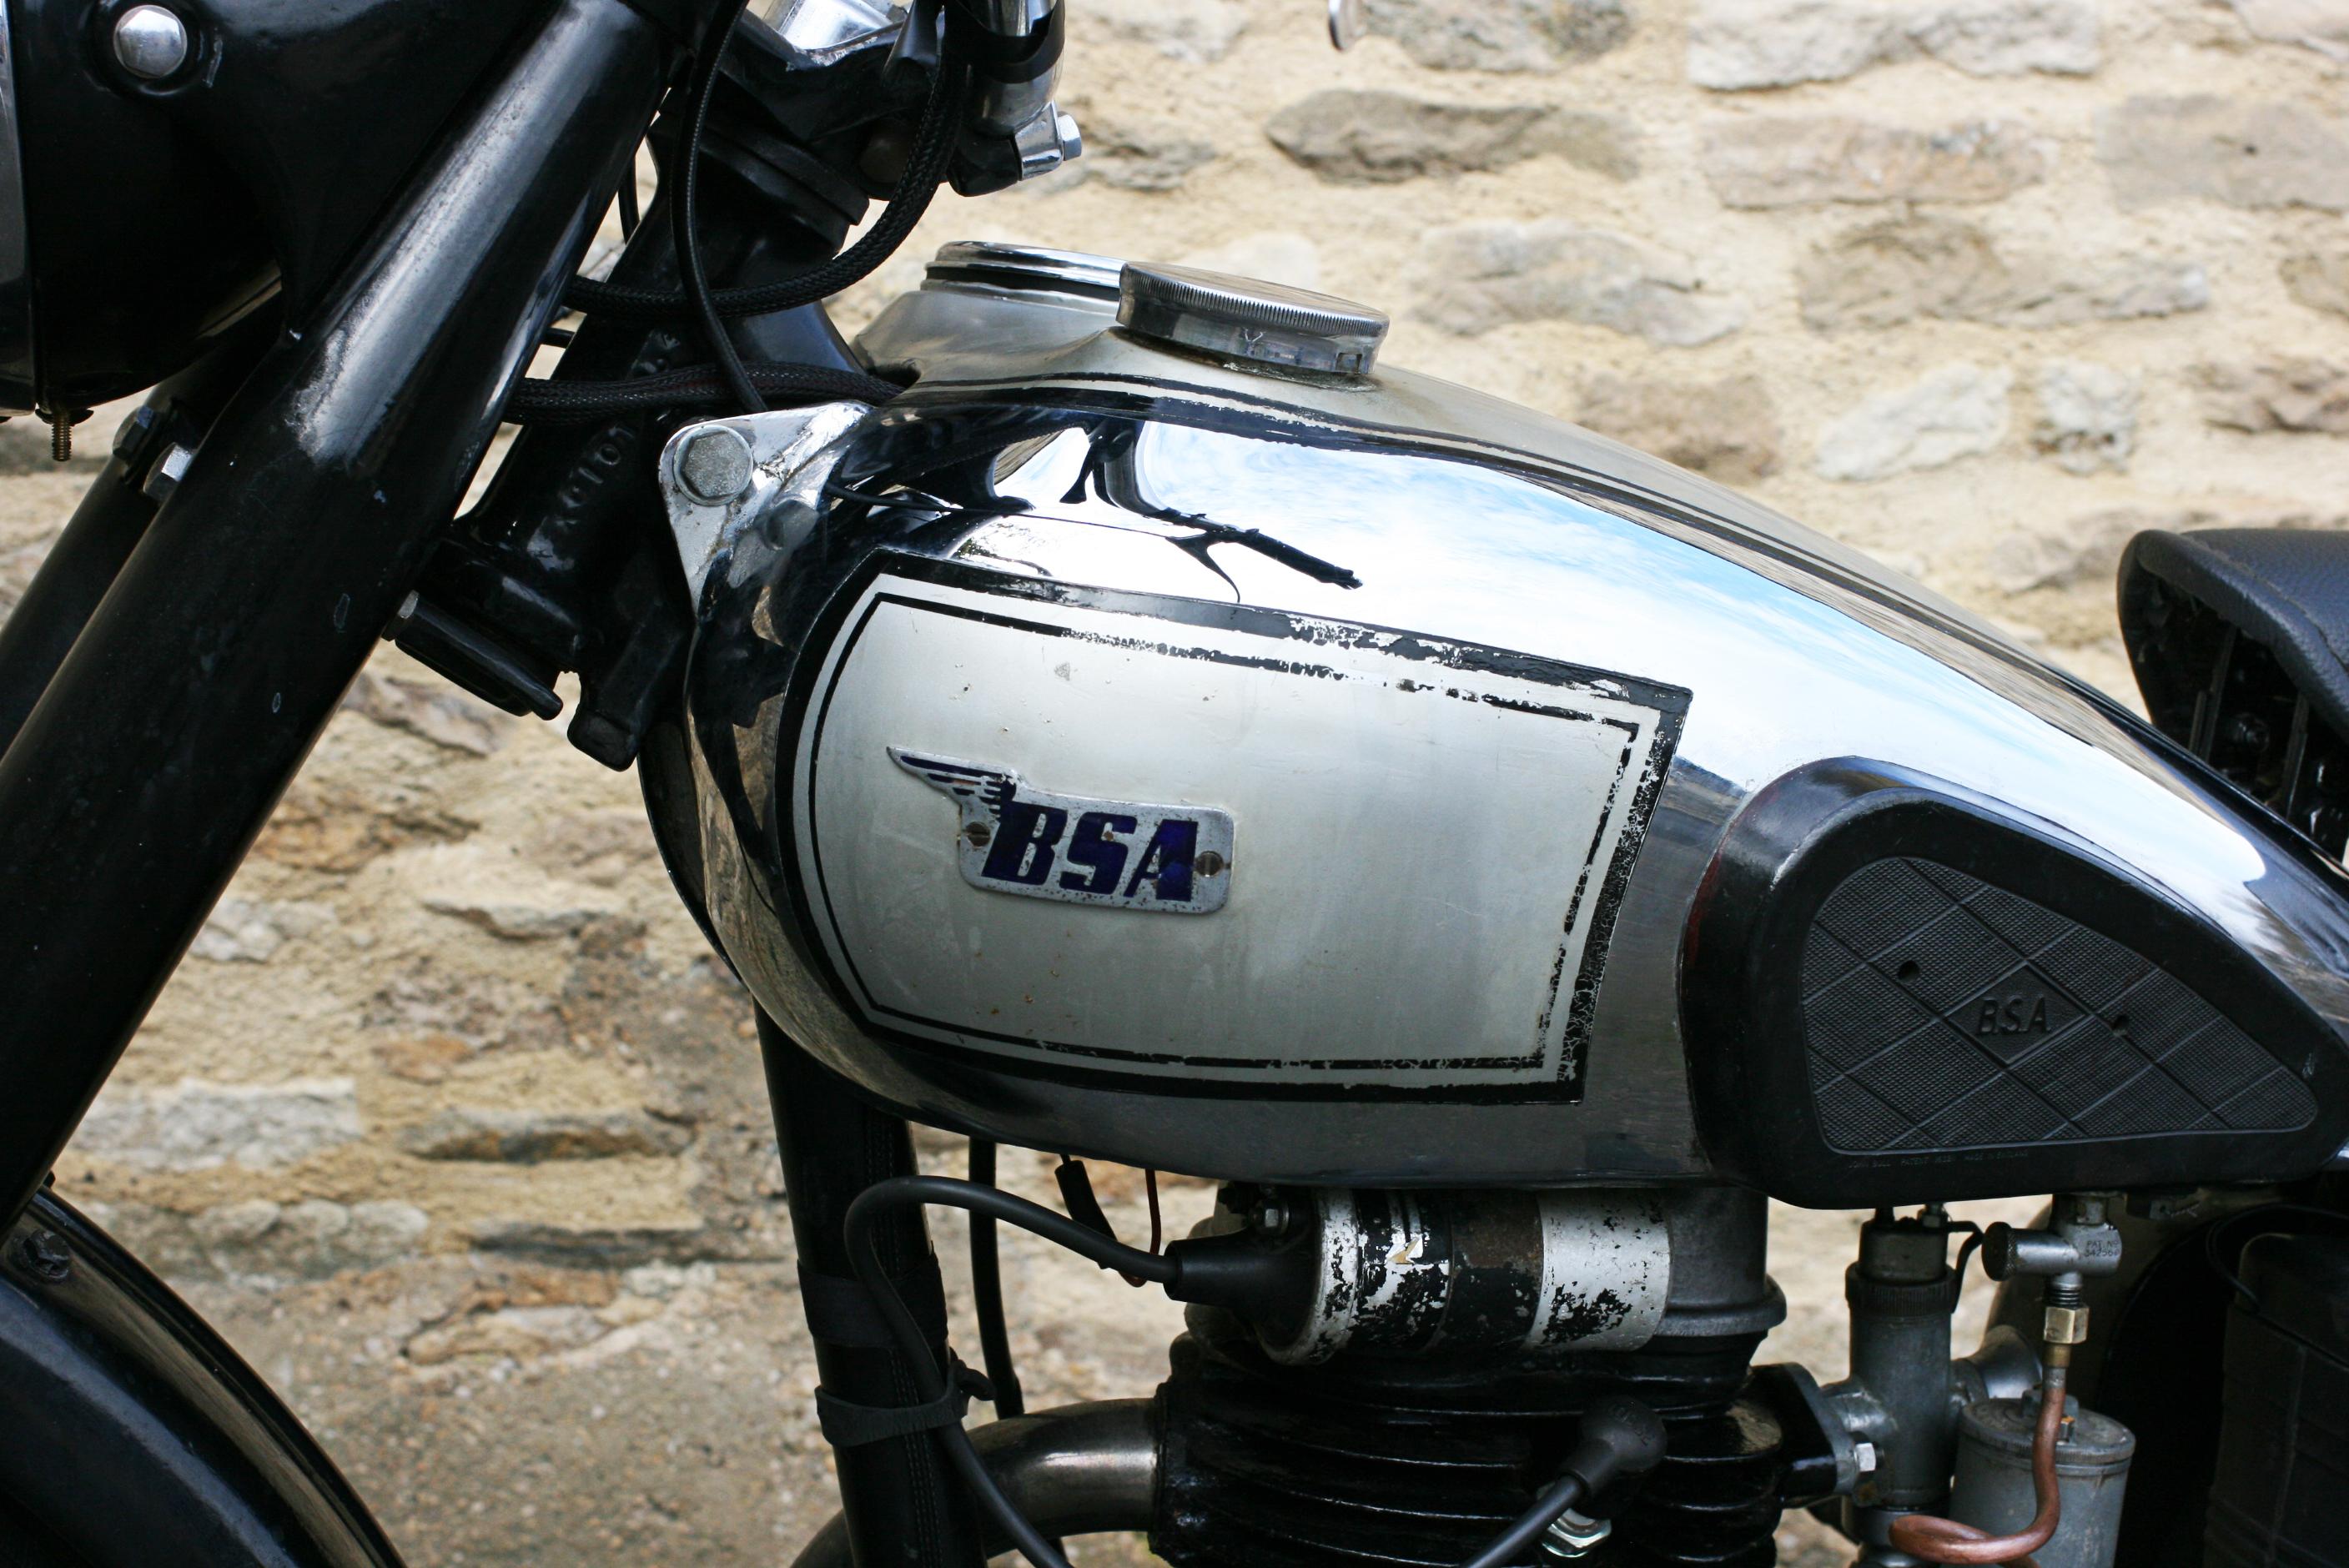 English BSA C11 Motorcycle, Classic 250 Cc. Single Cylinder Overhead Valve, Rigid Frame